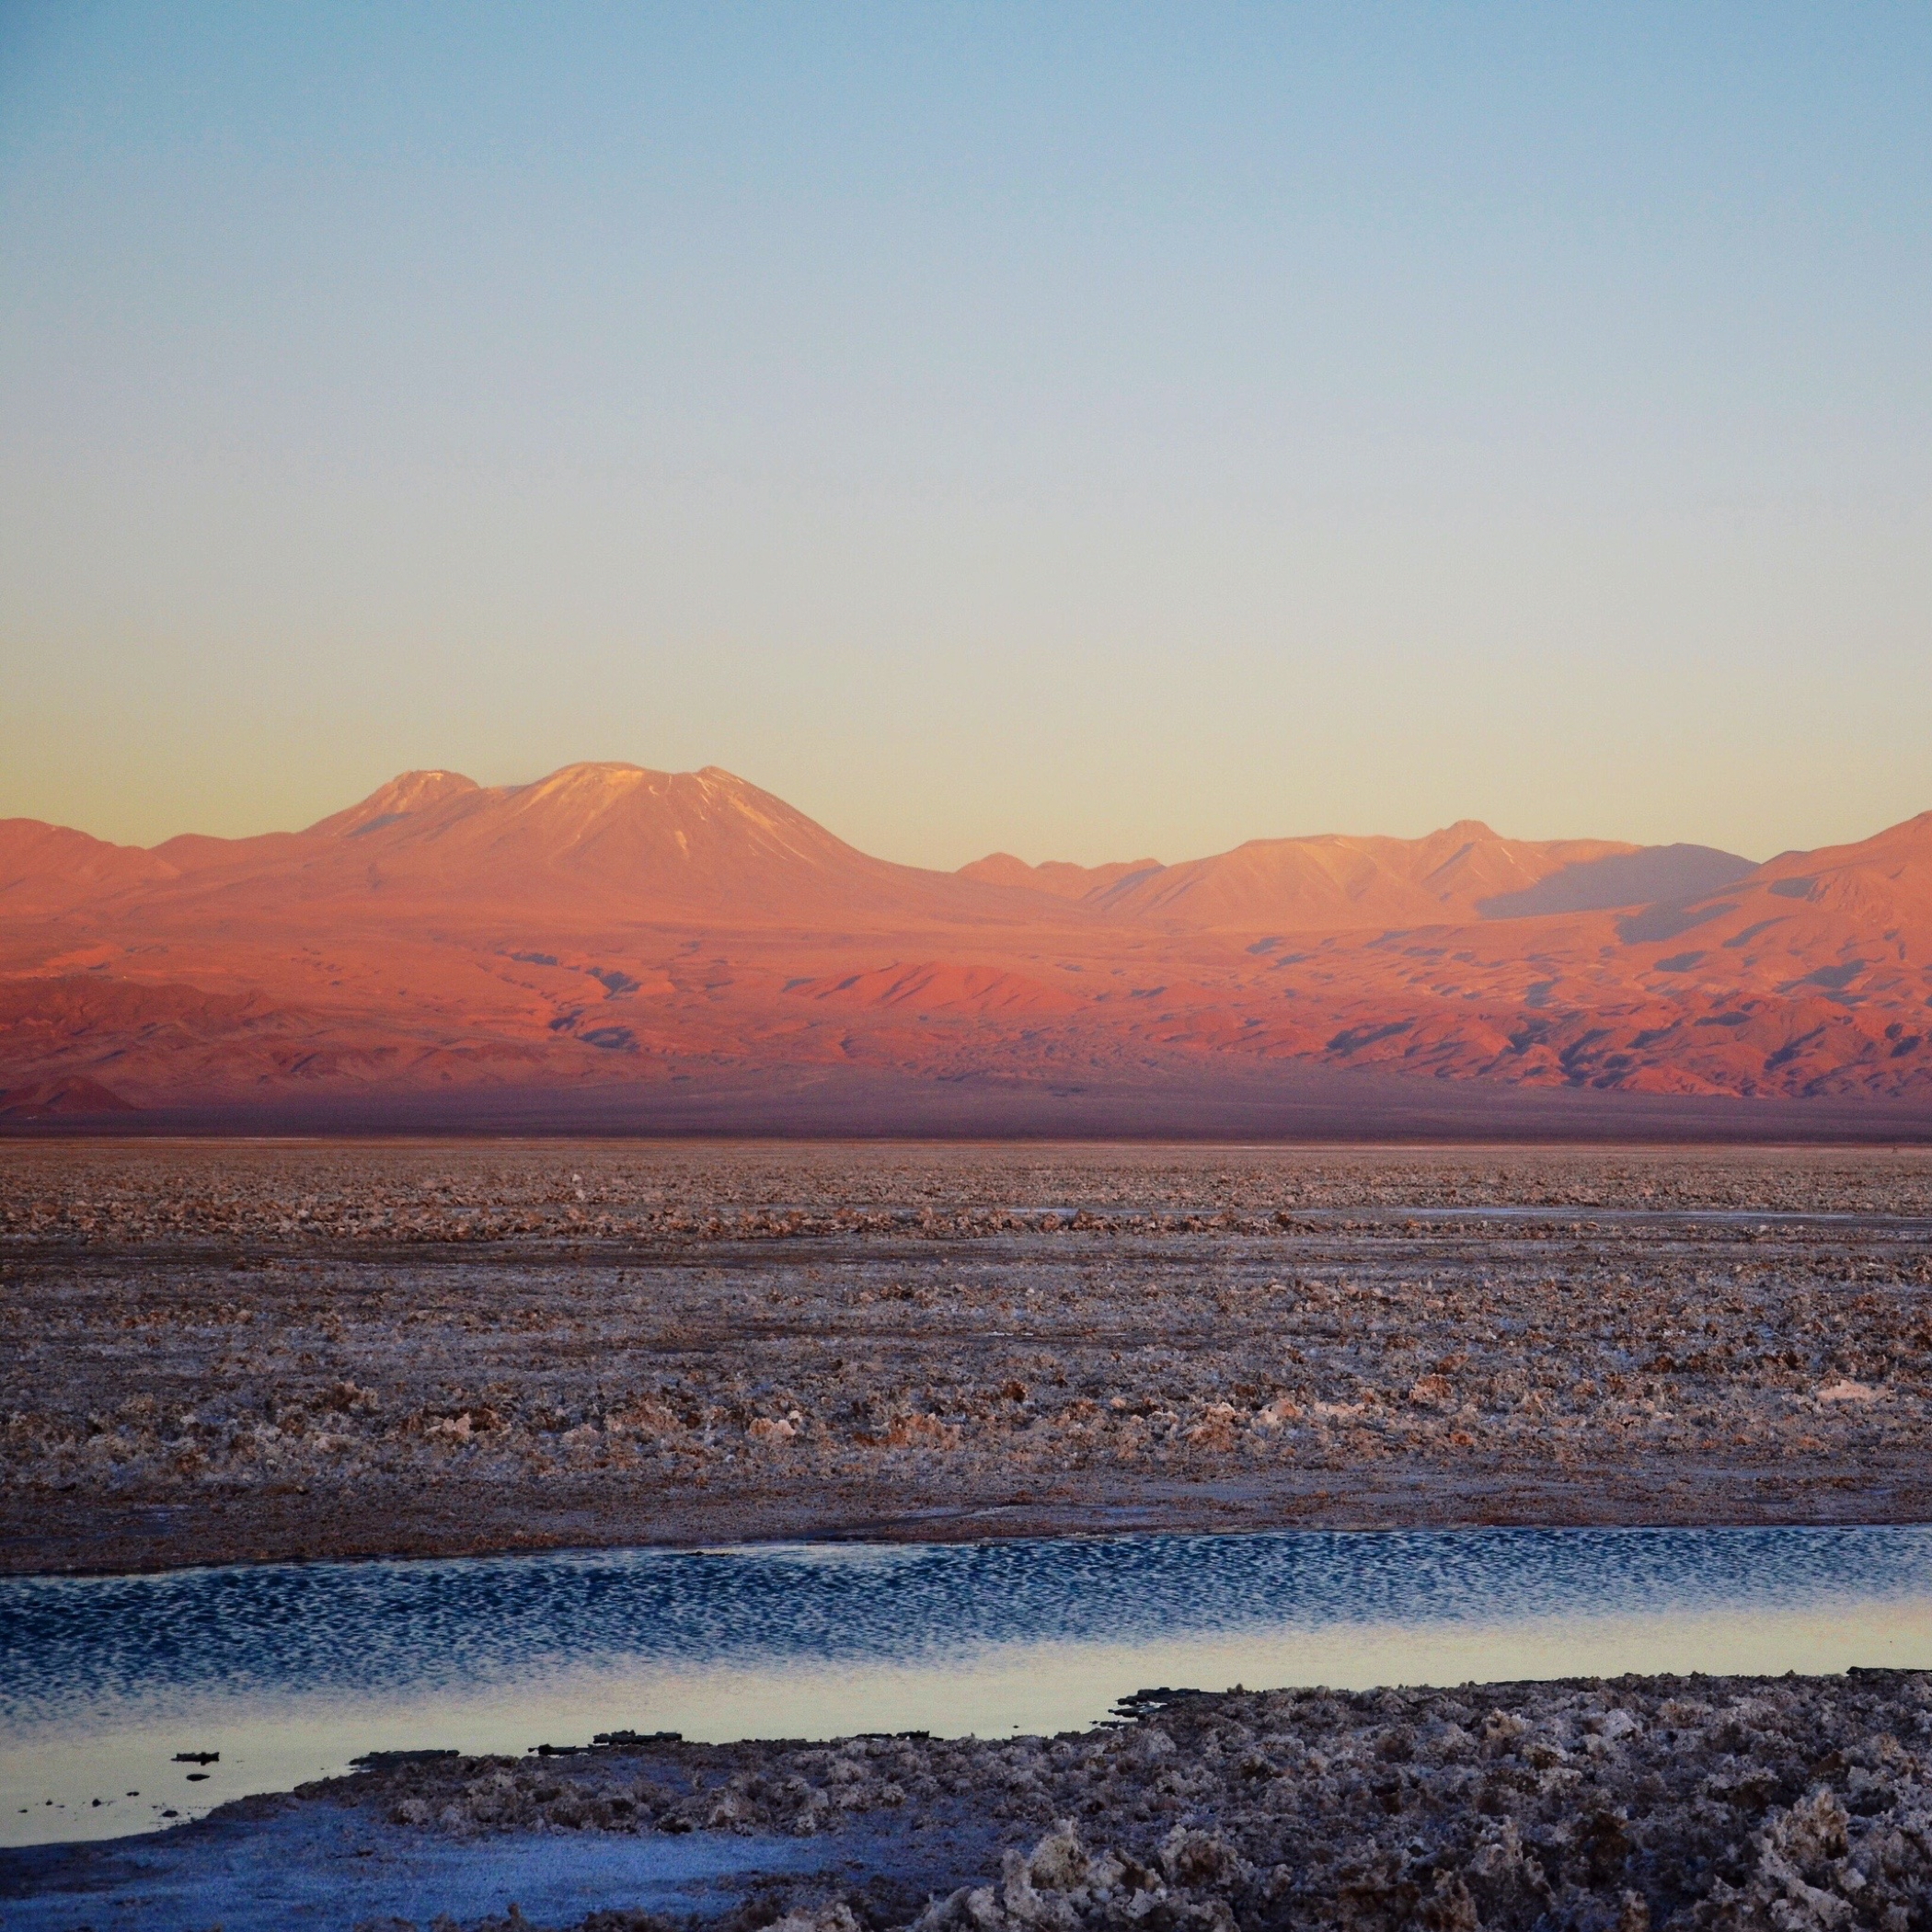 One favorite Instagram 2015 photo from Atacama desert in Chile